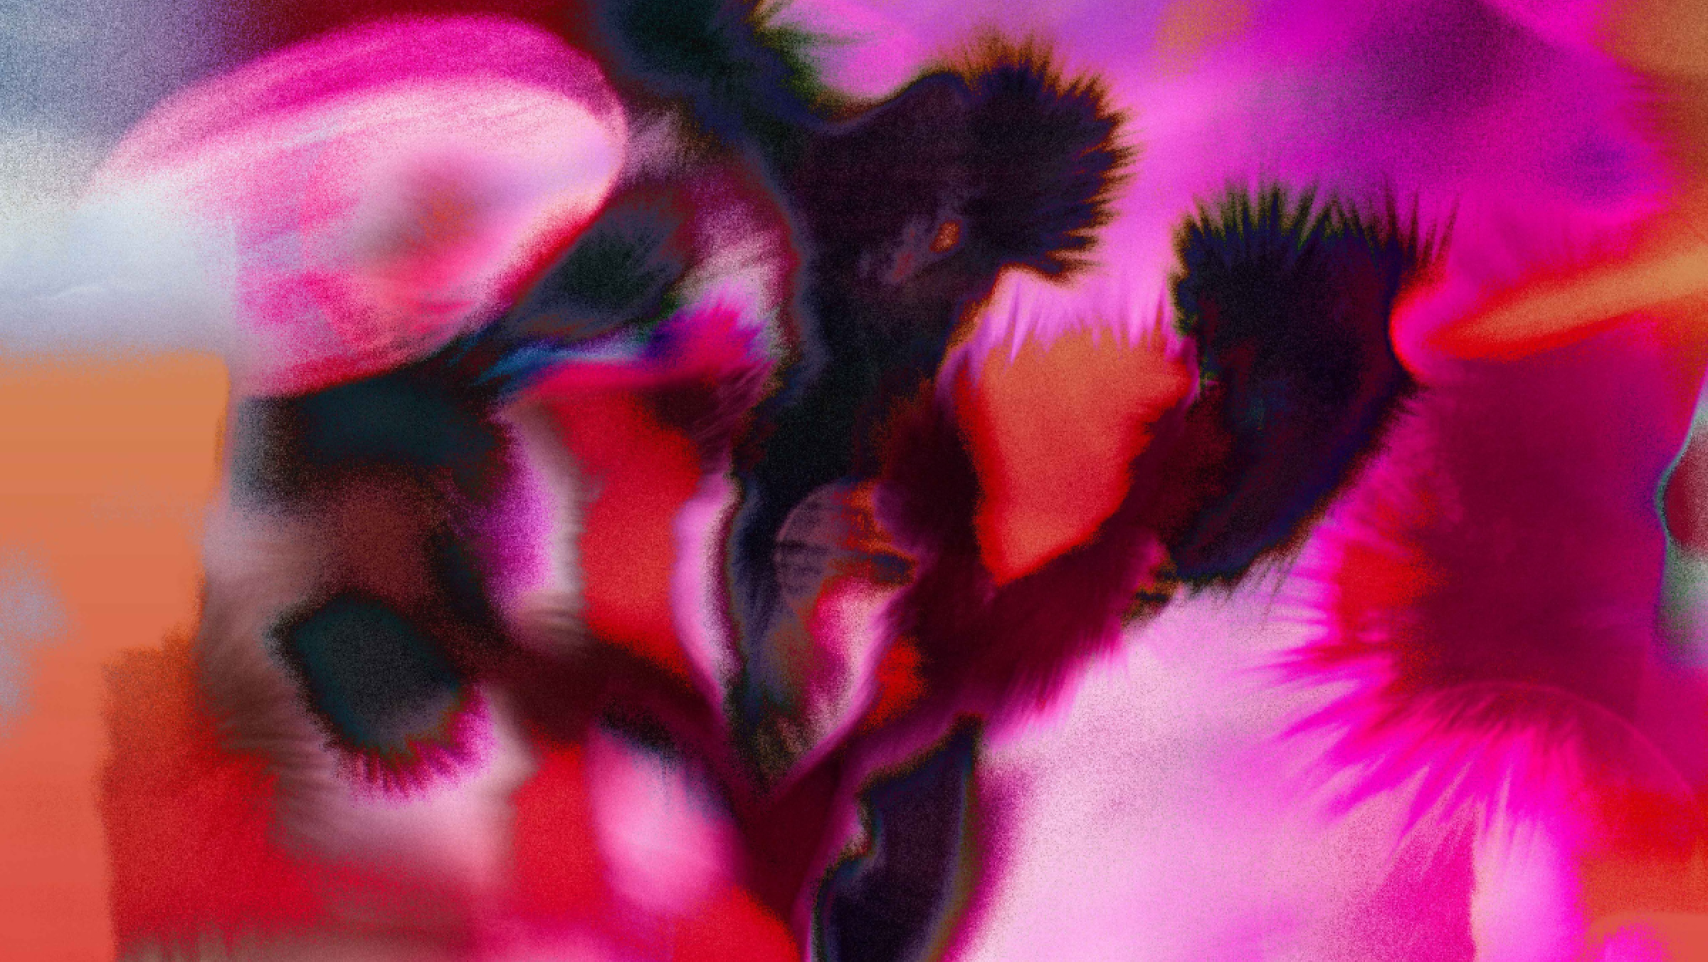 A digital illustration of a black Joshua tree blurred amid pink, red and orange color bursts